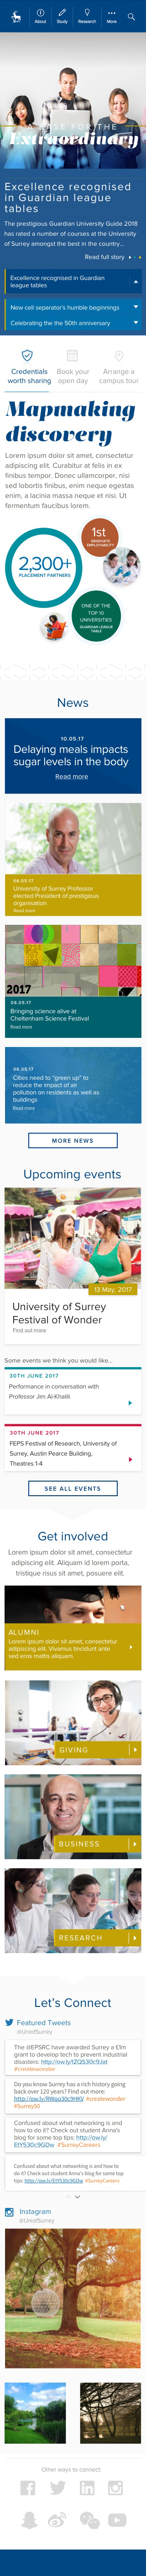 University of Surrey mobile homepage